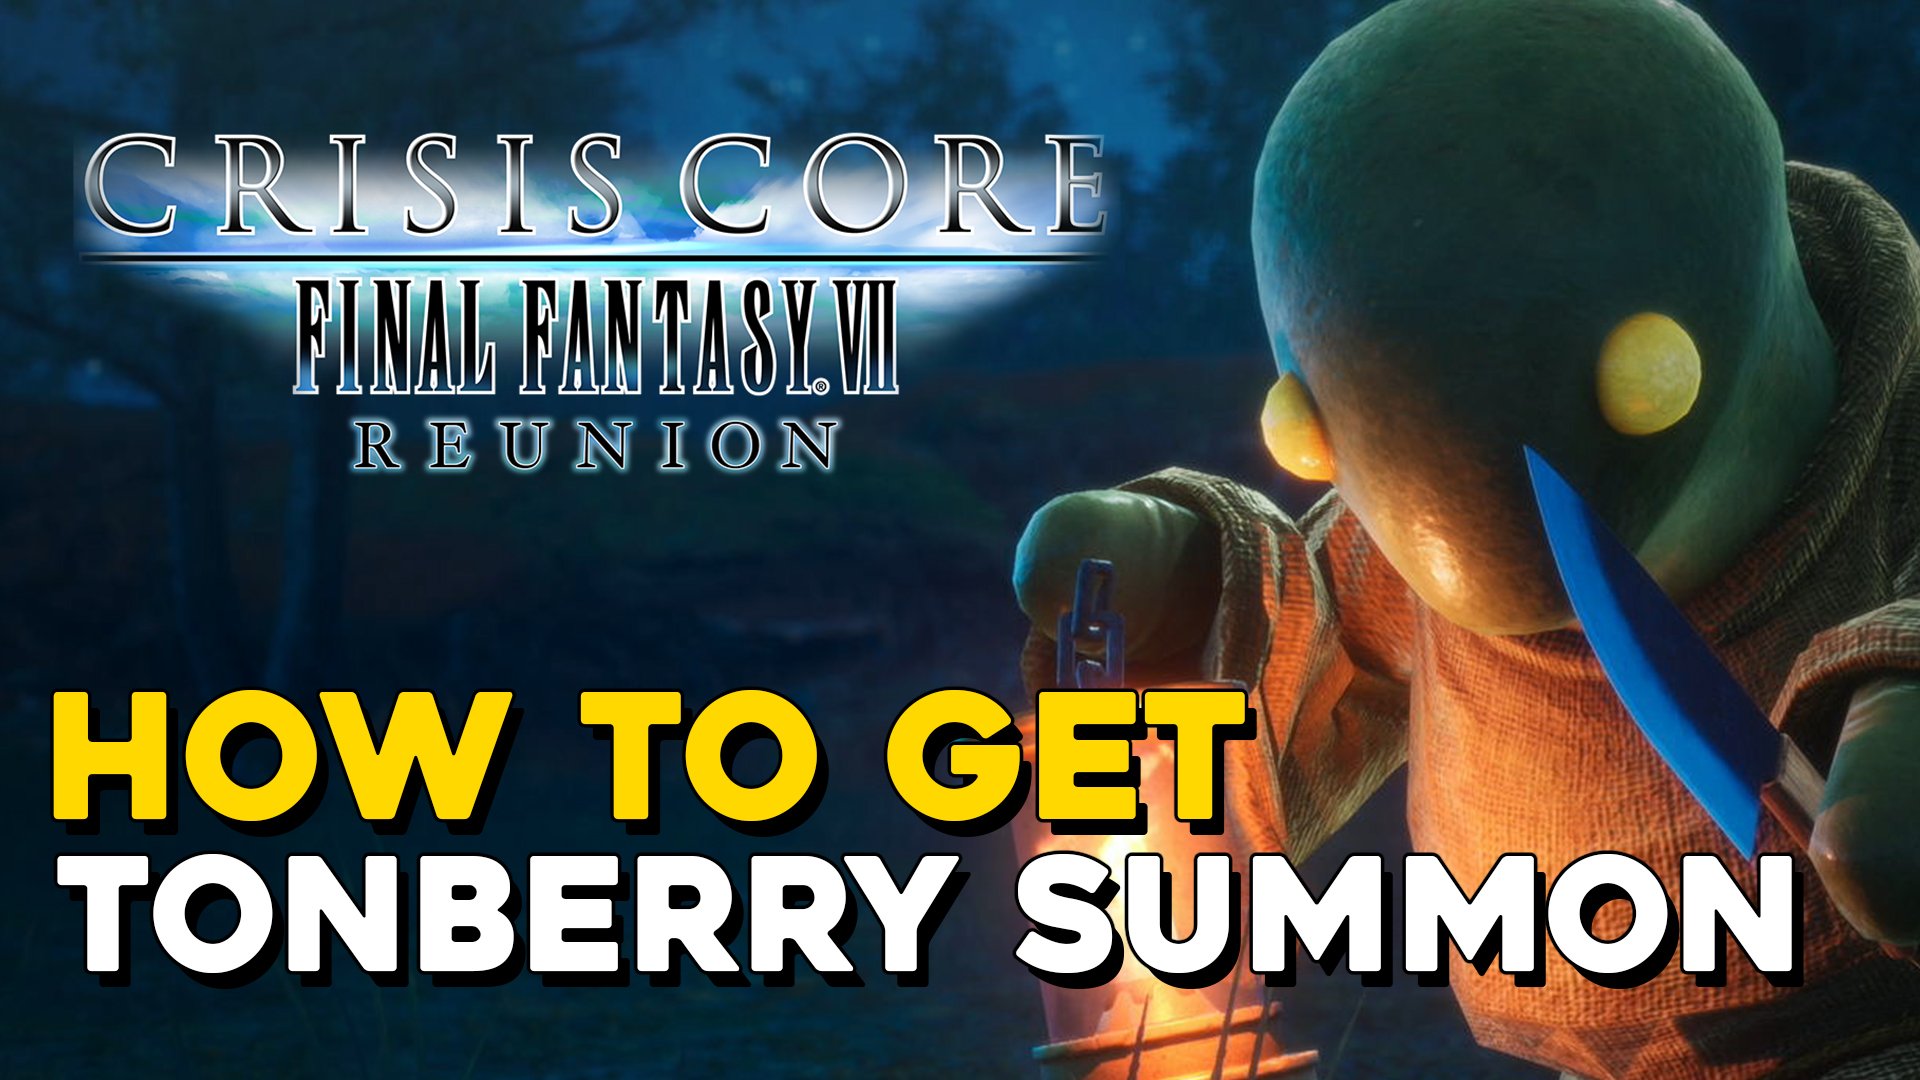 Crisis Core Final Fantasy 7 Reunion How To Get Tonberry Summon (DMW).jpg